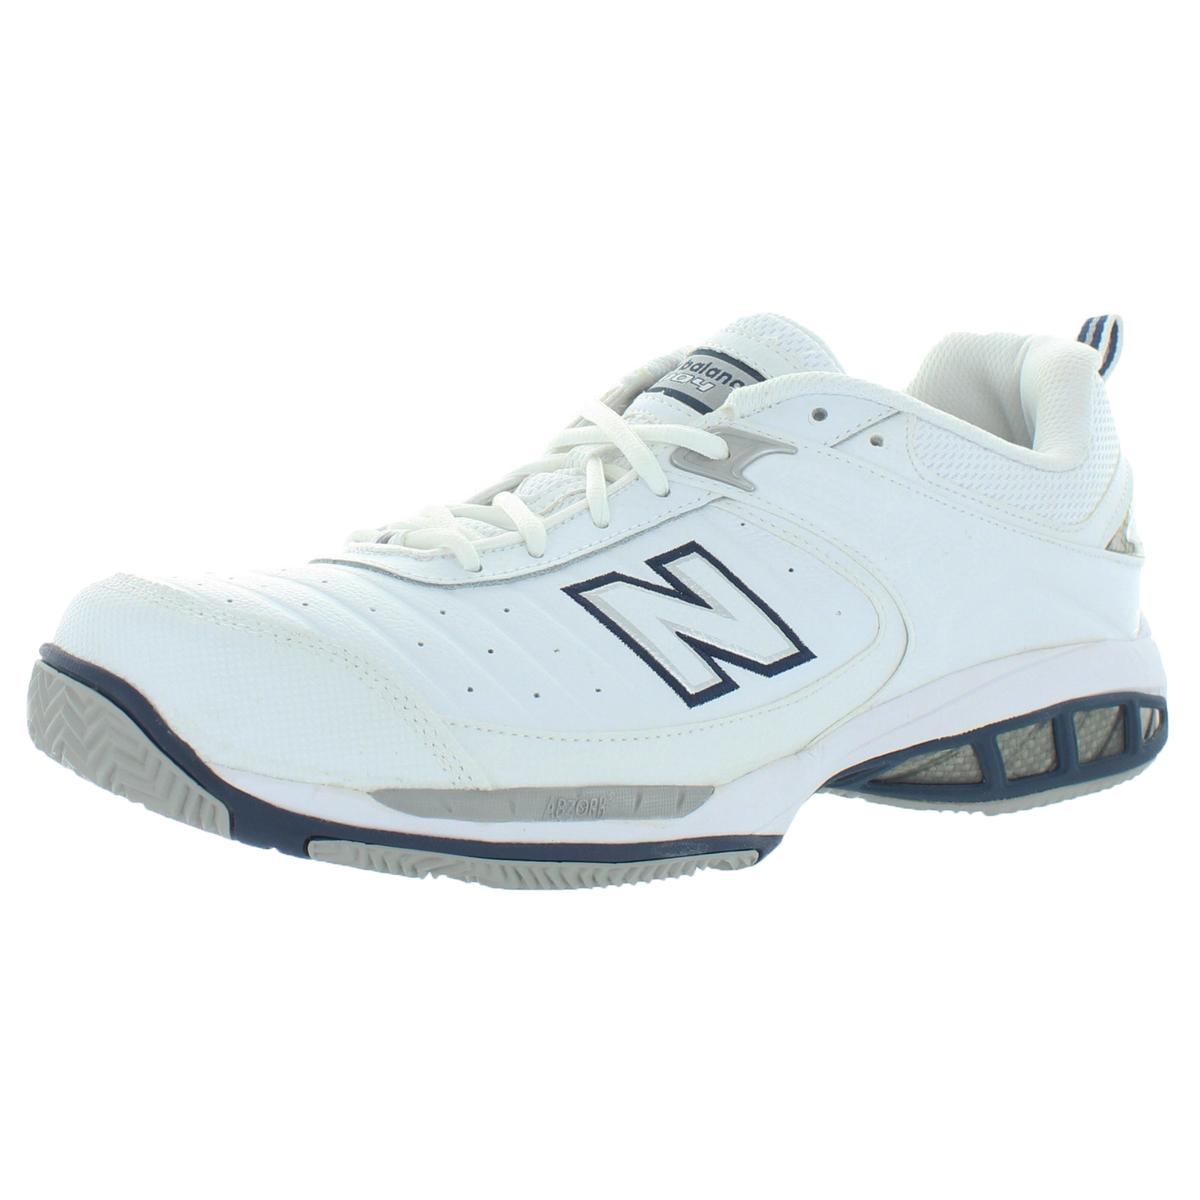 New Balance Mens 804 White Athletic Shoes Sneakers 14 Narrow (B) BHFO ...